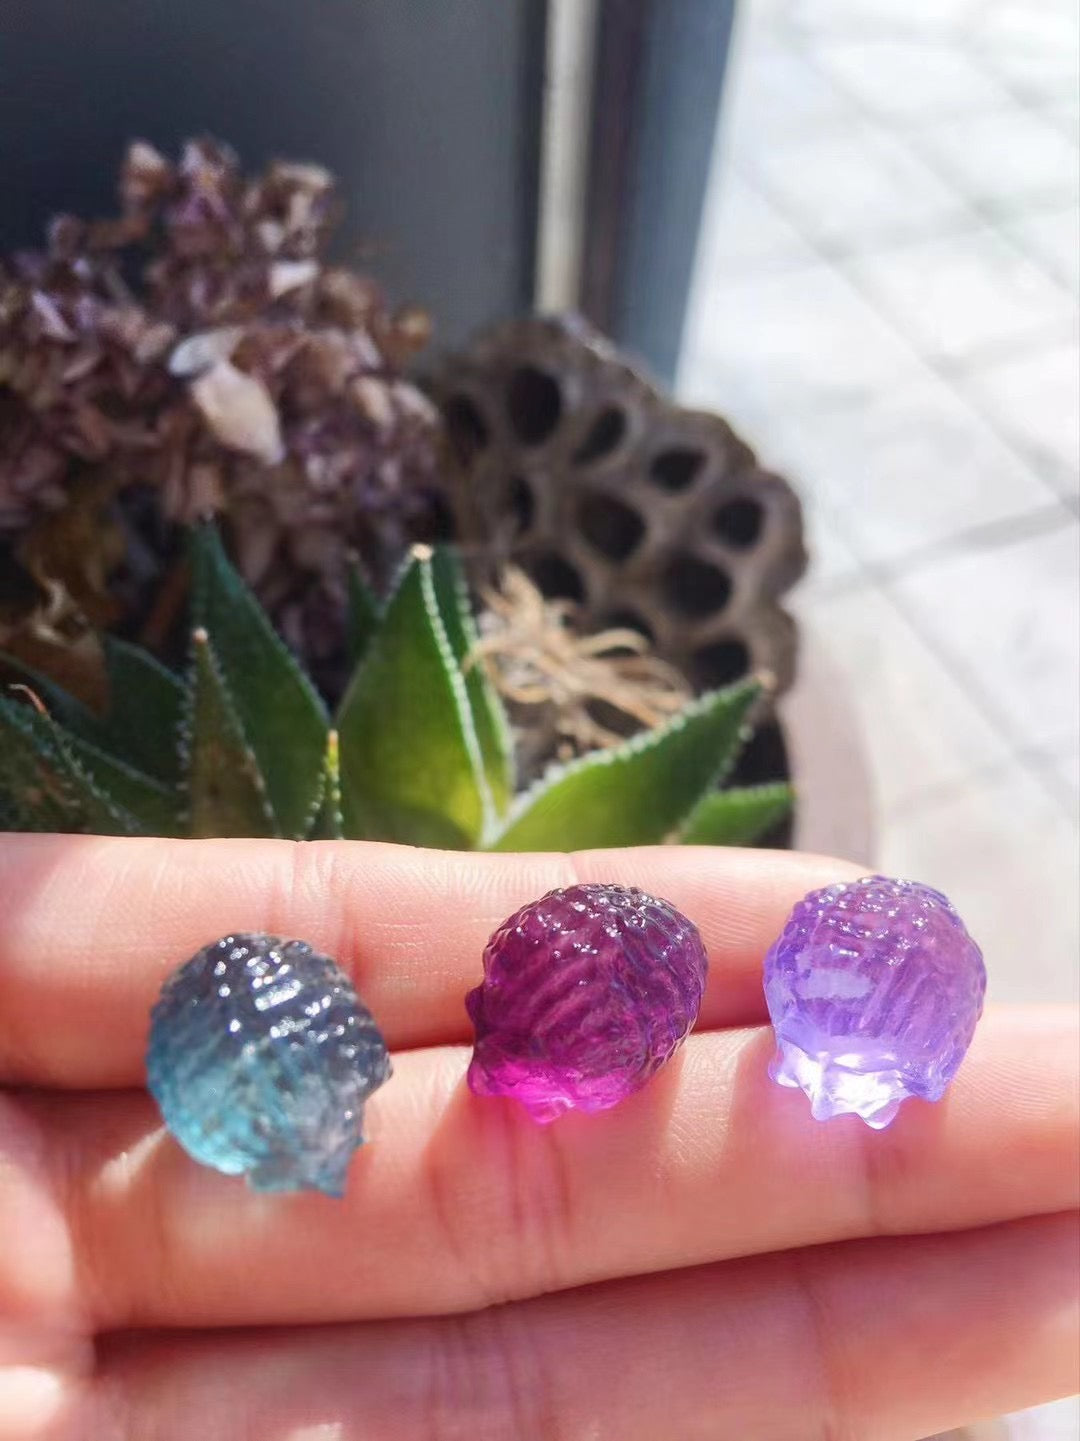 Mini Fluorite Crystal shaped like Buddha, Rabbit, and Hamster1